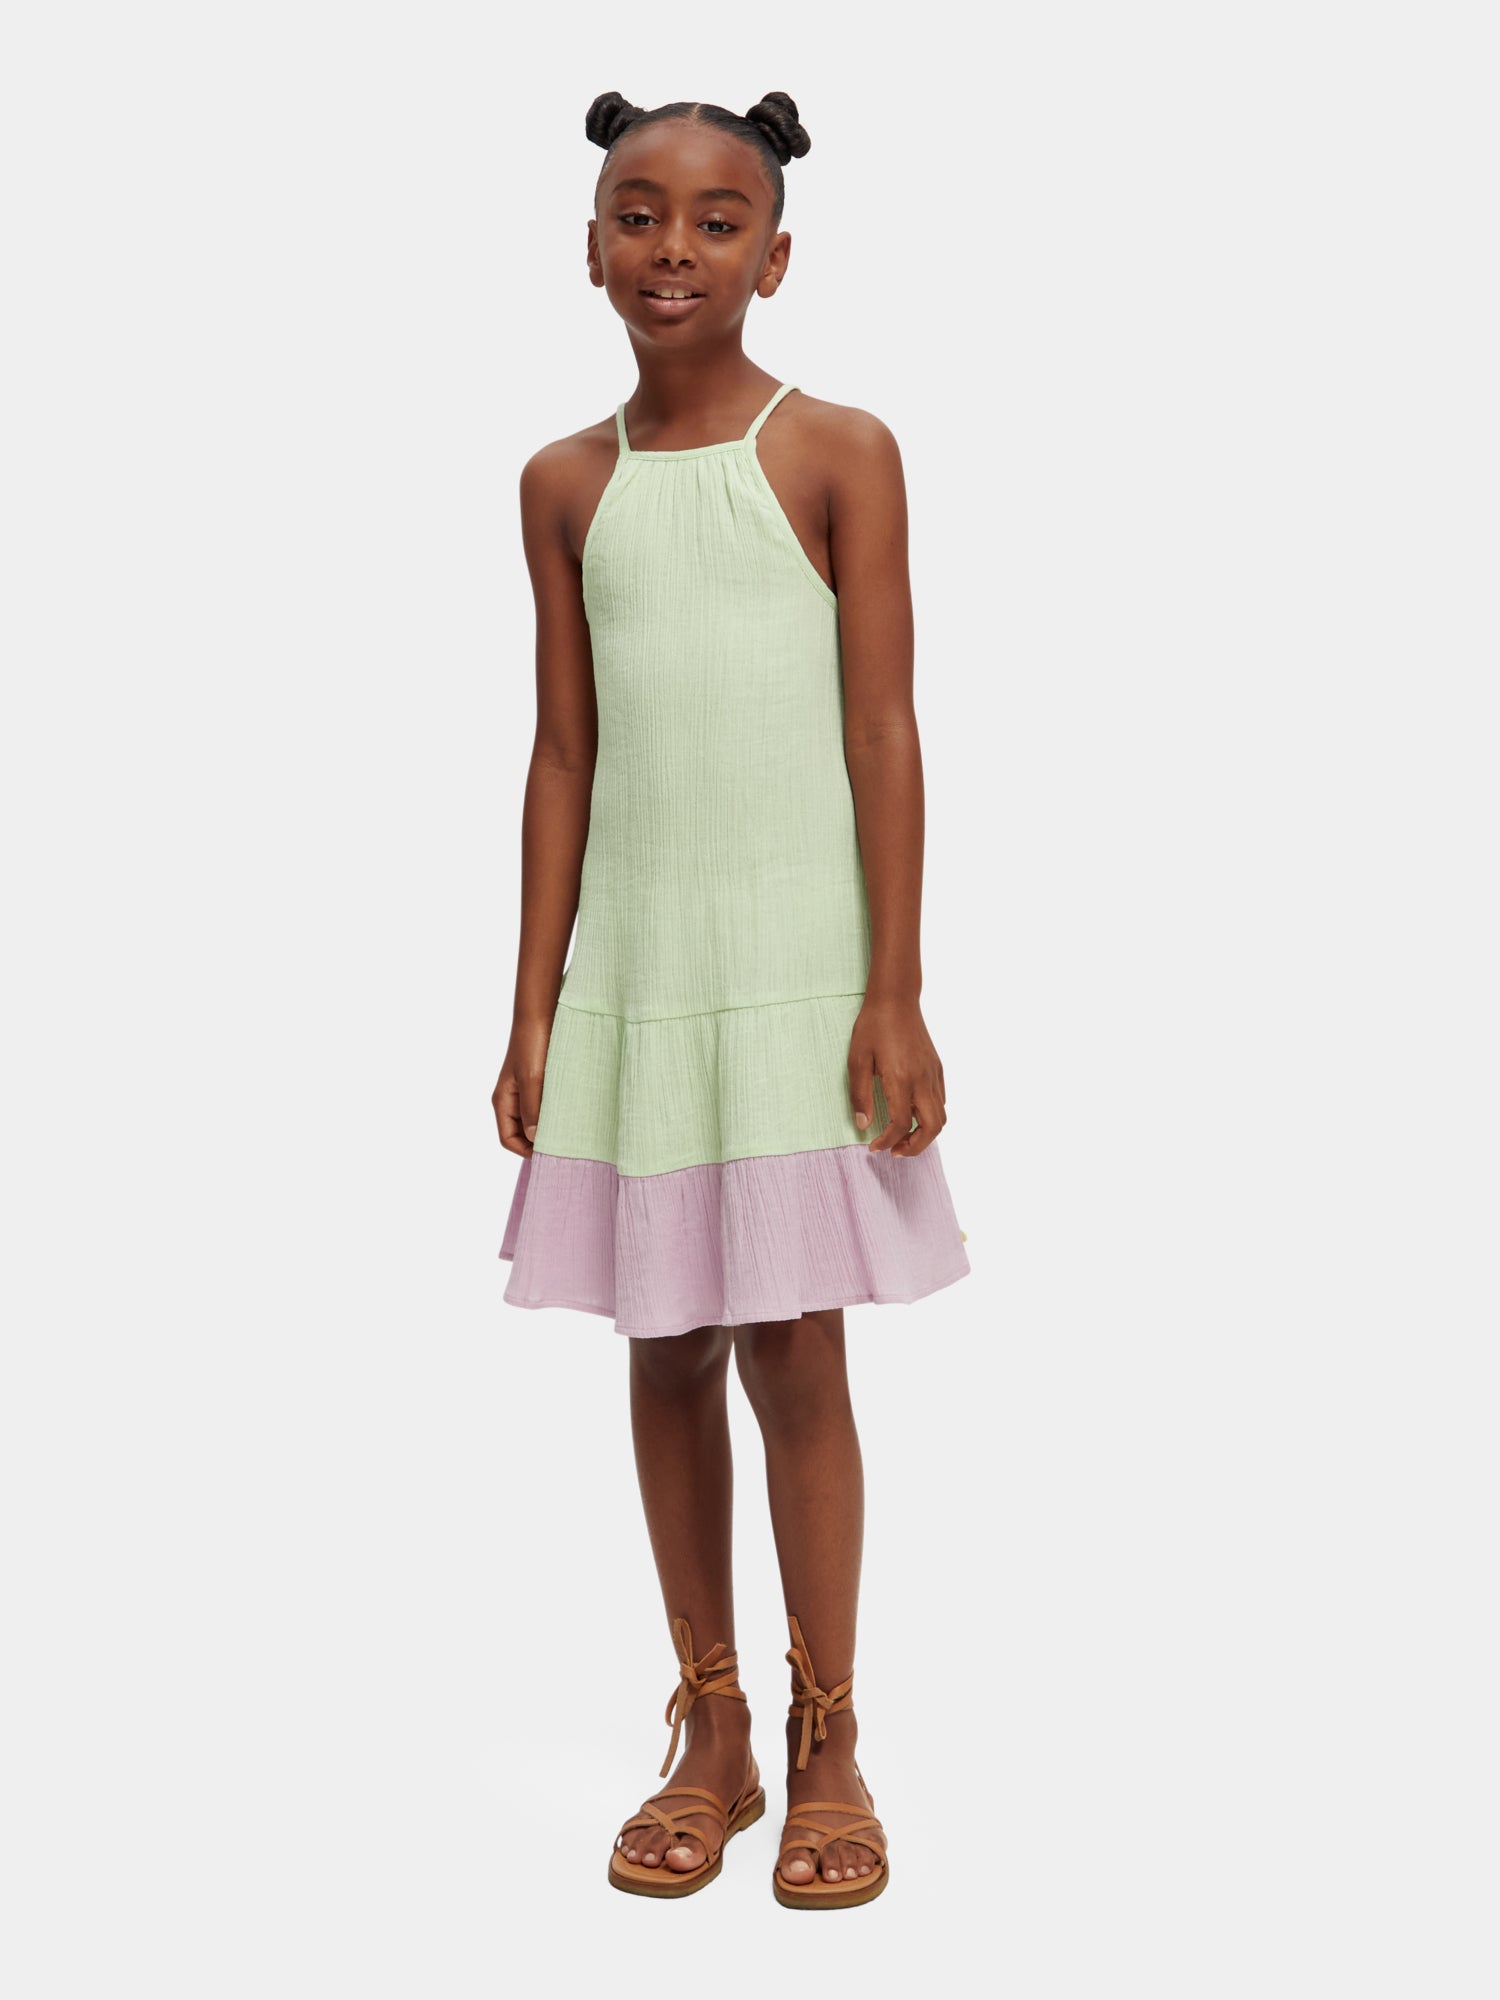 Buy Midi Frock for Baby Girl's 2-6 Years - Beautiful Kids Dress (2-3 Years,  Maroon) at Amazon.in